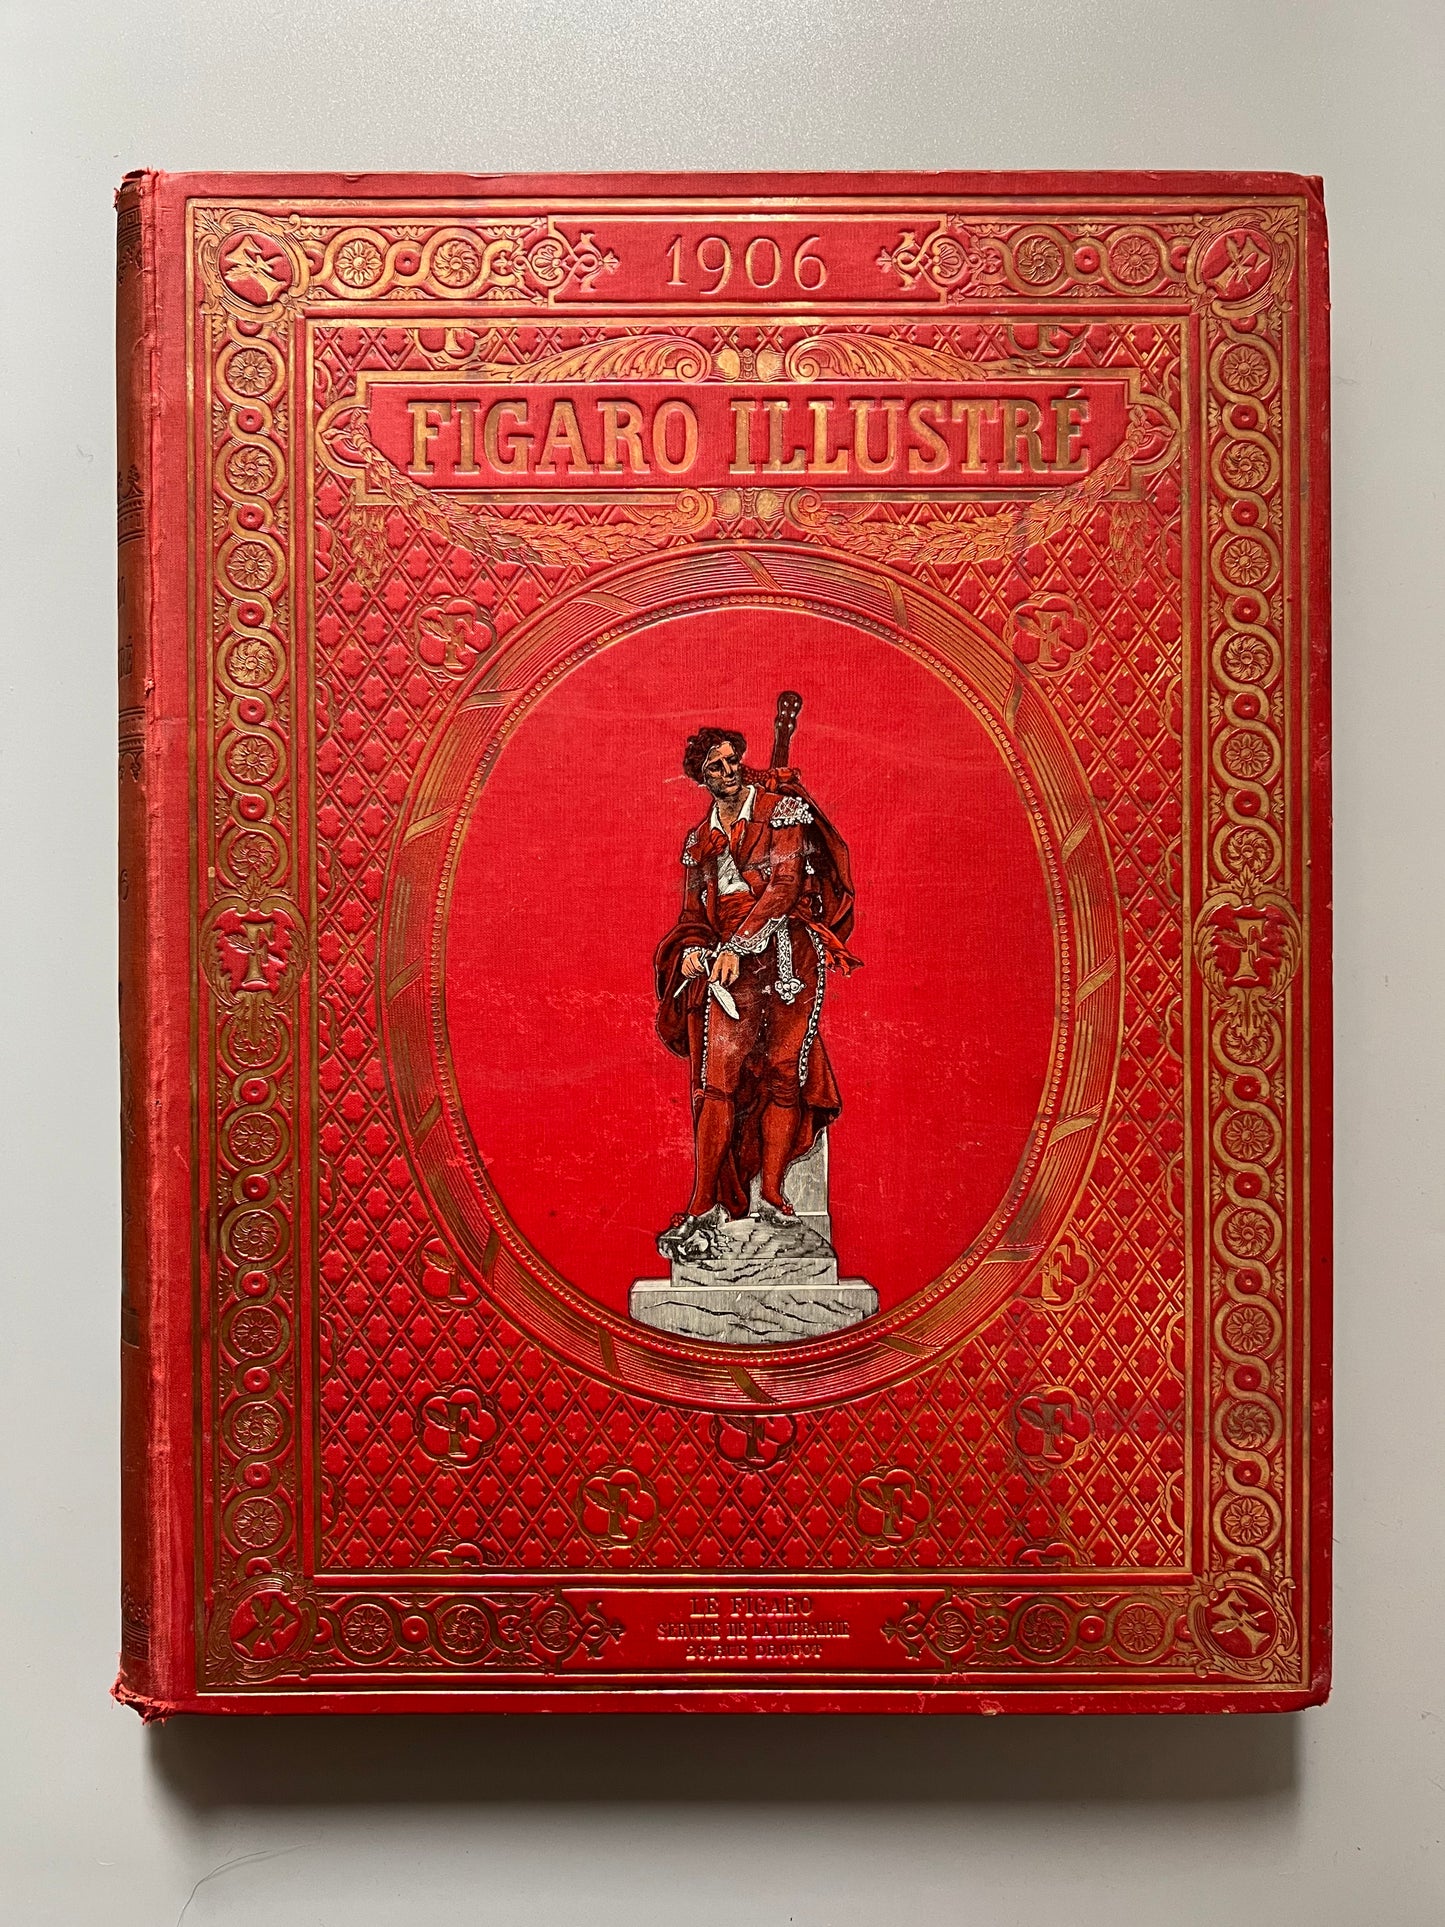 Figaro illustré, revista encuadernada - 1906 año completo